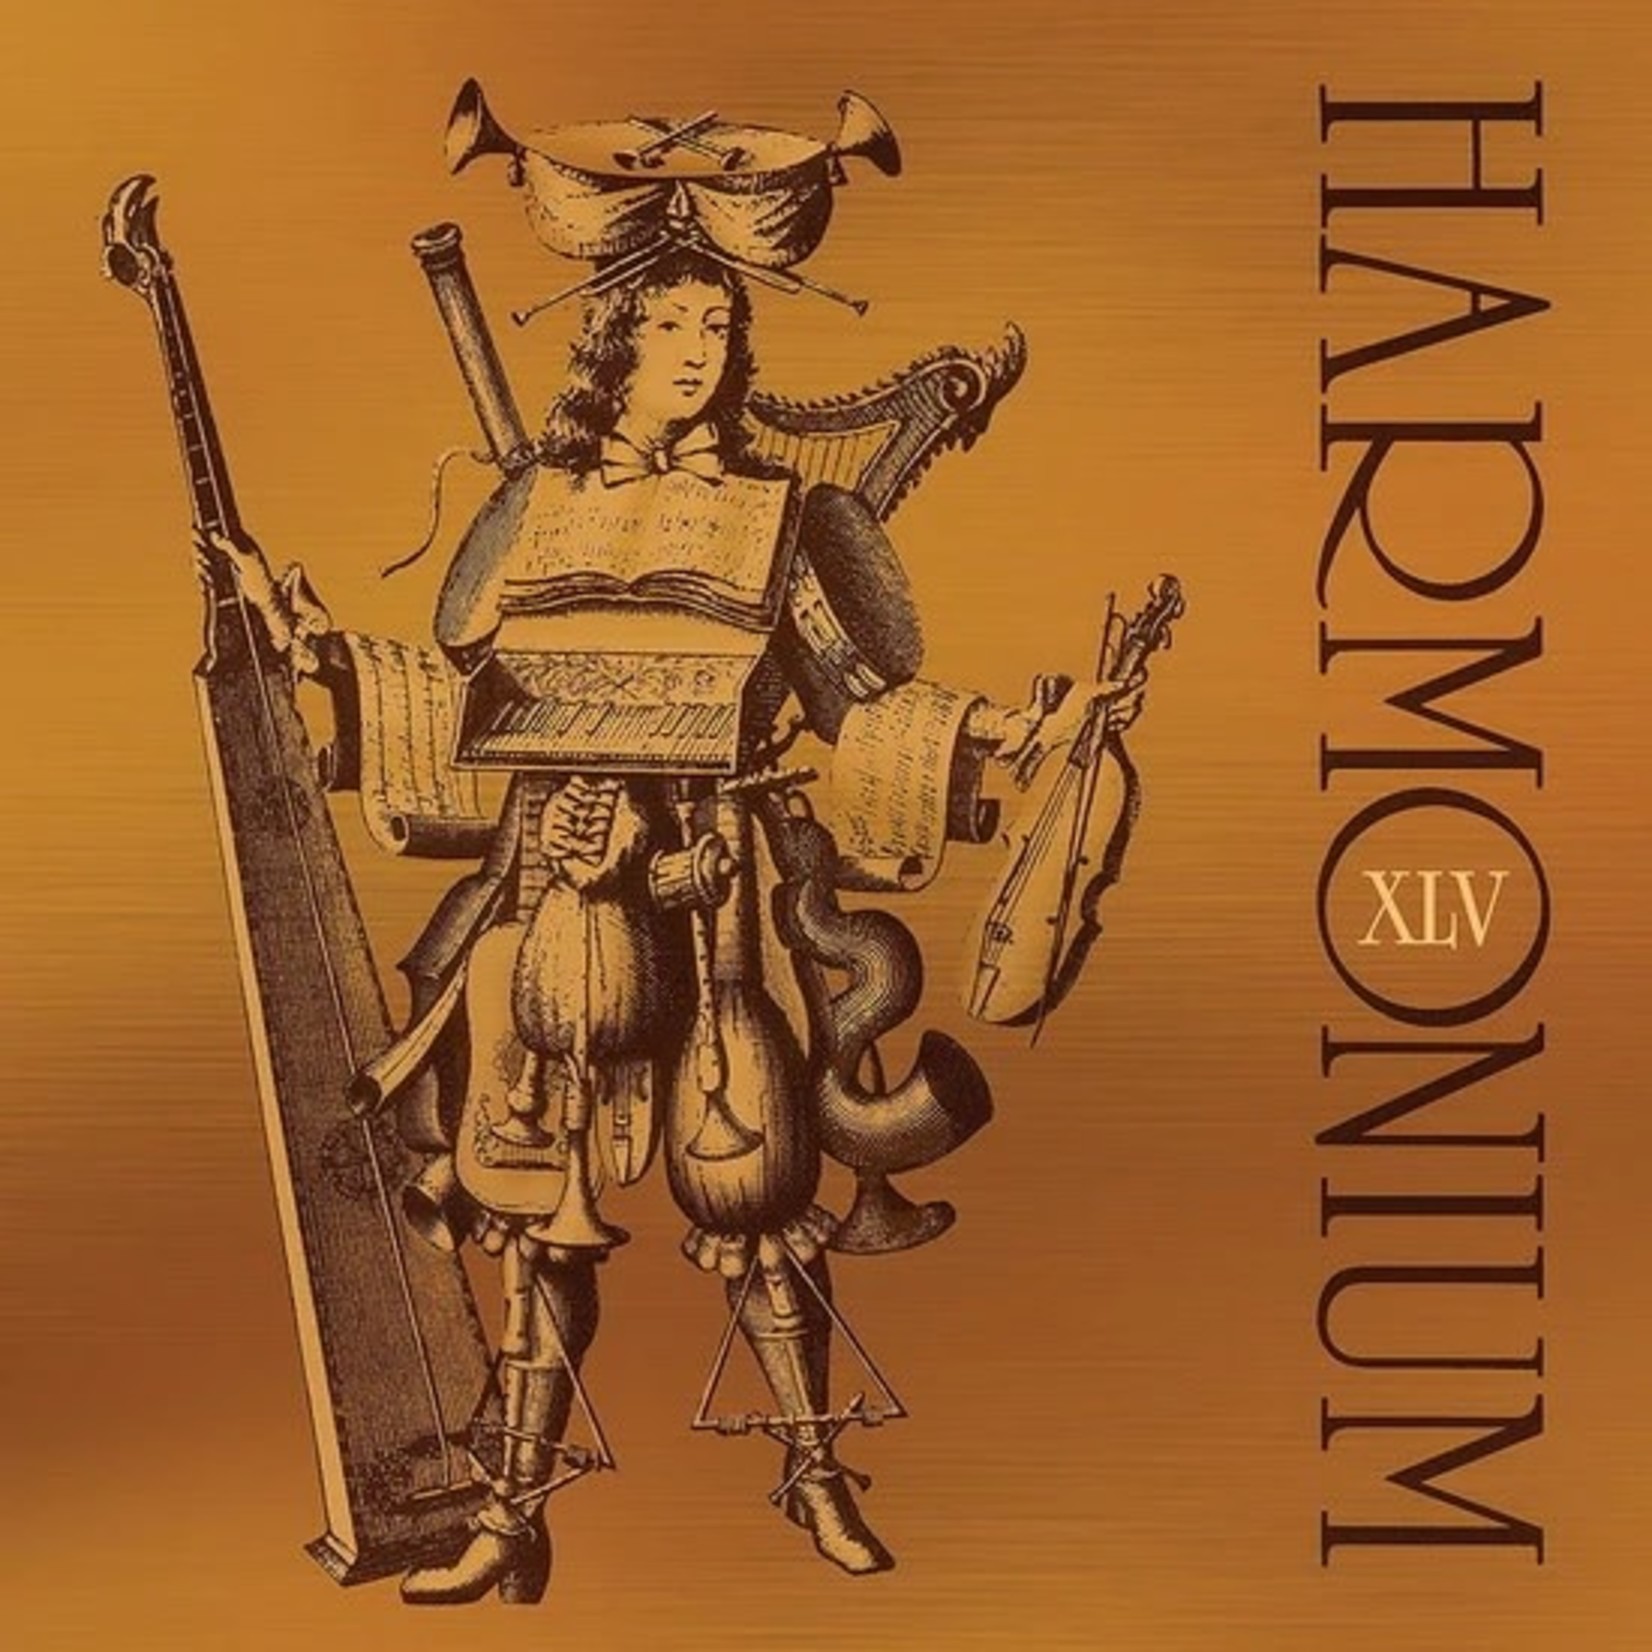 [New] Harmonium - Harmonium XLV (45e anniversaire)